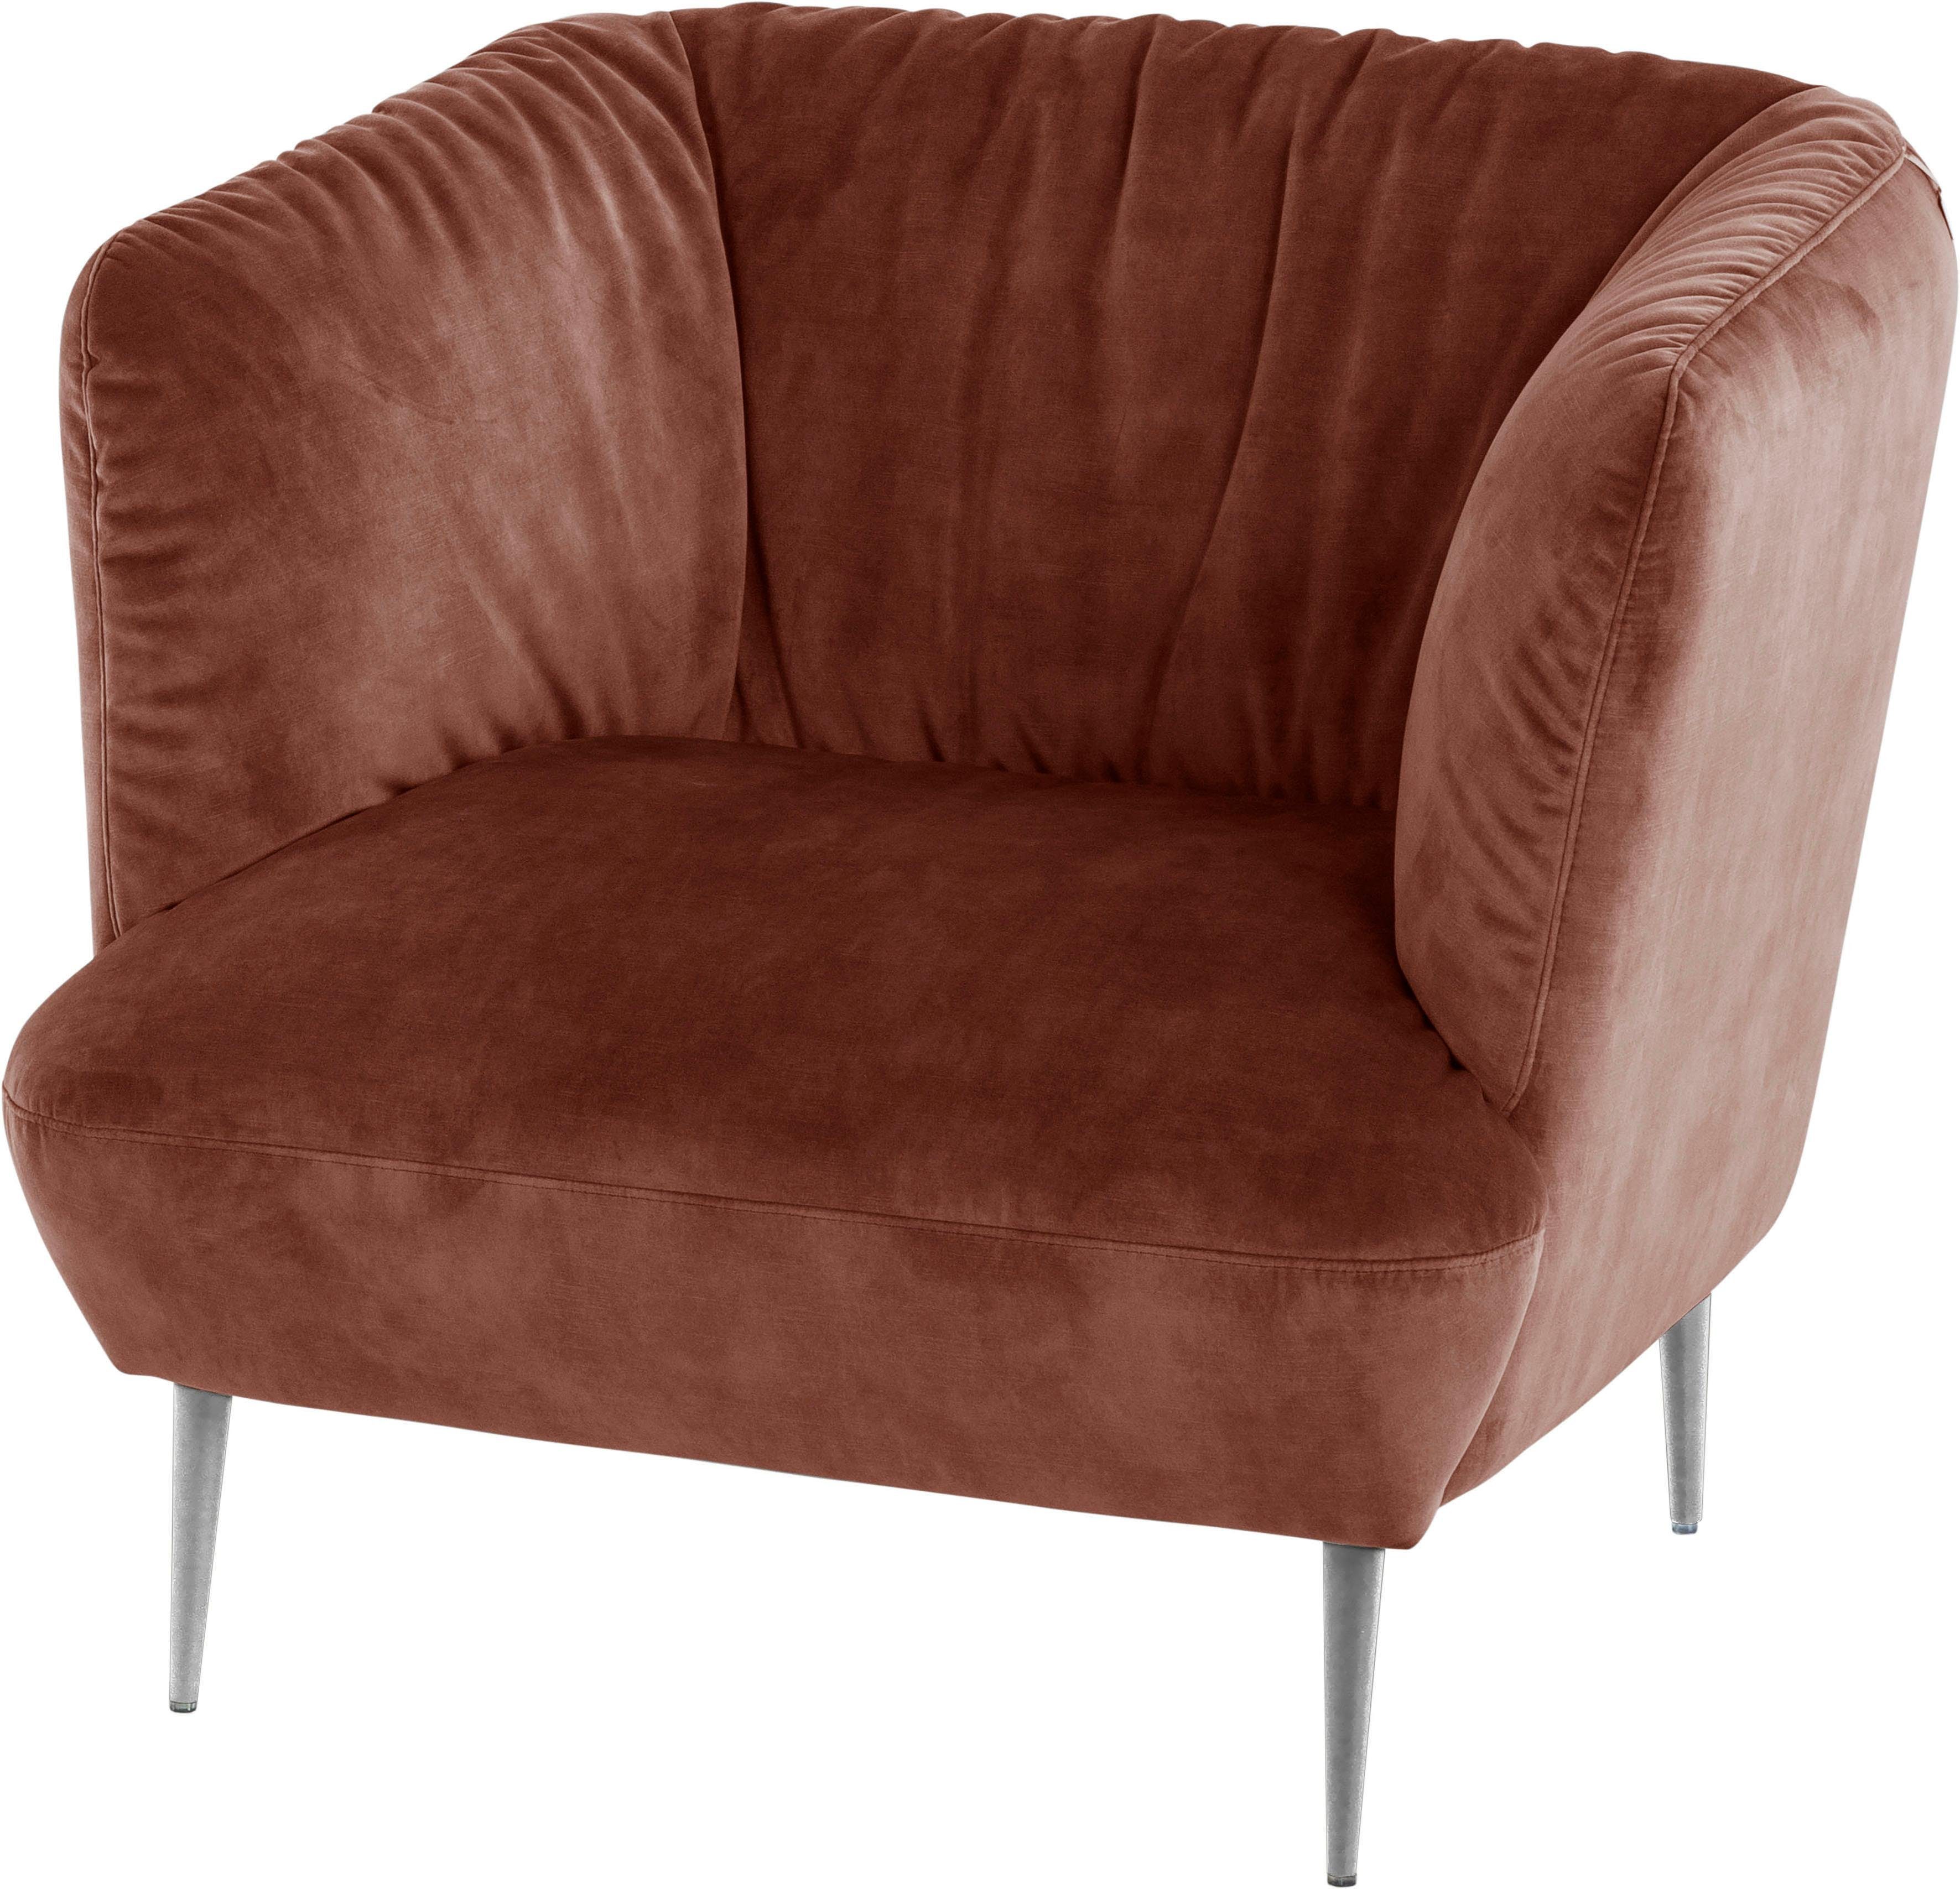 W.SCHILLIG Sessel glänzend Boch ELLA, Villeroy S41 & Füße copper Chrom